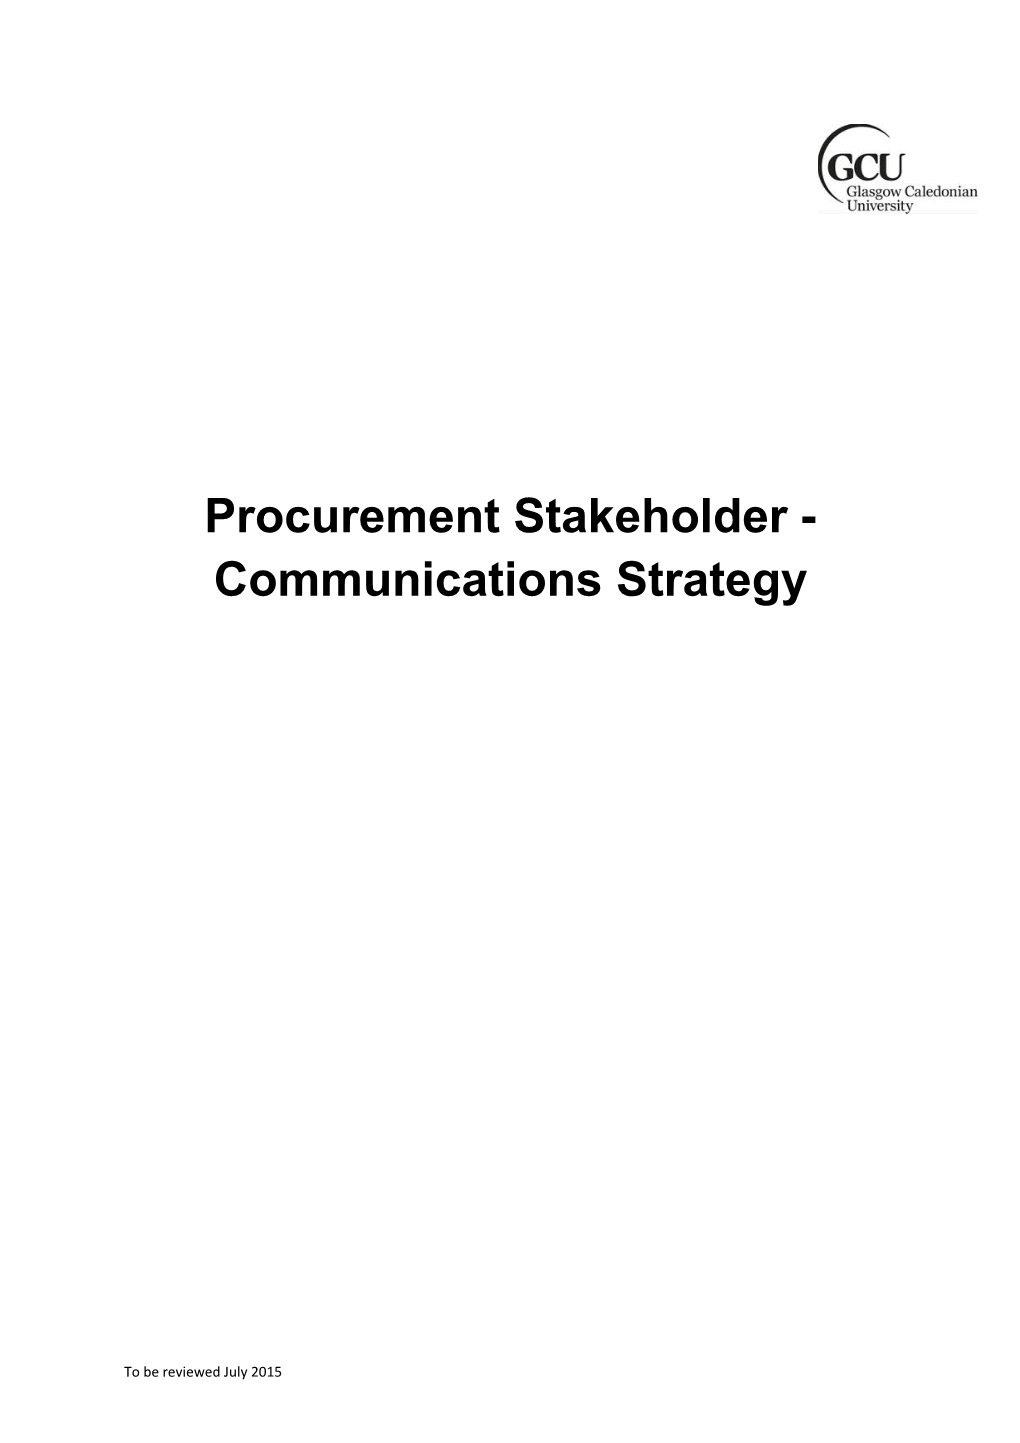 Procurementstakeholder - Communications Strategy